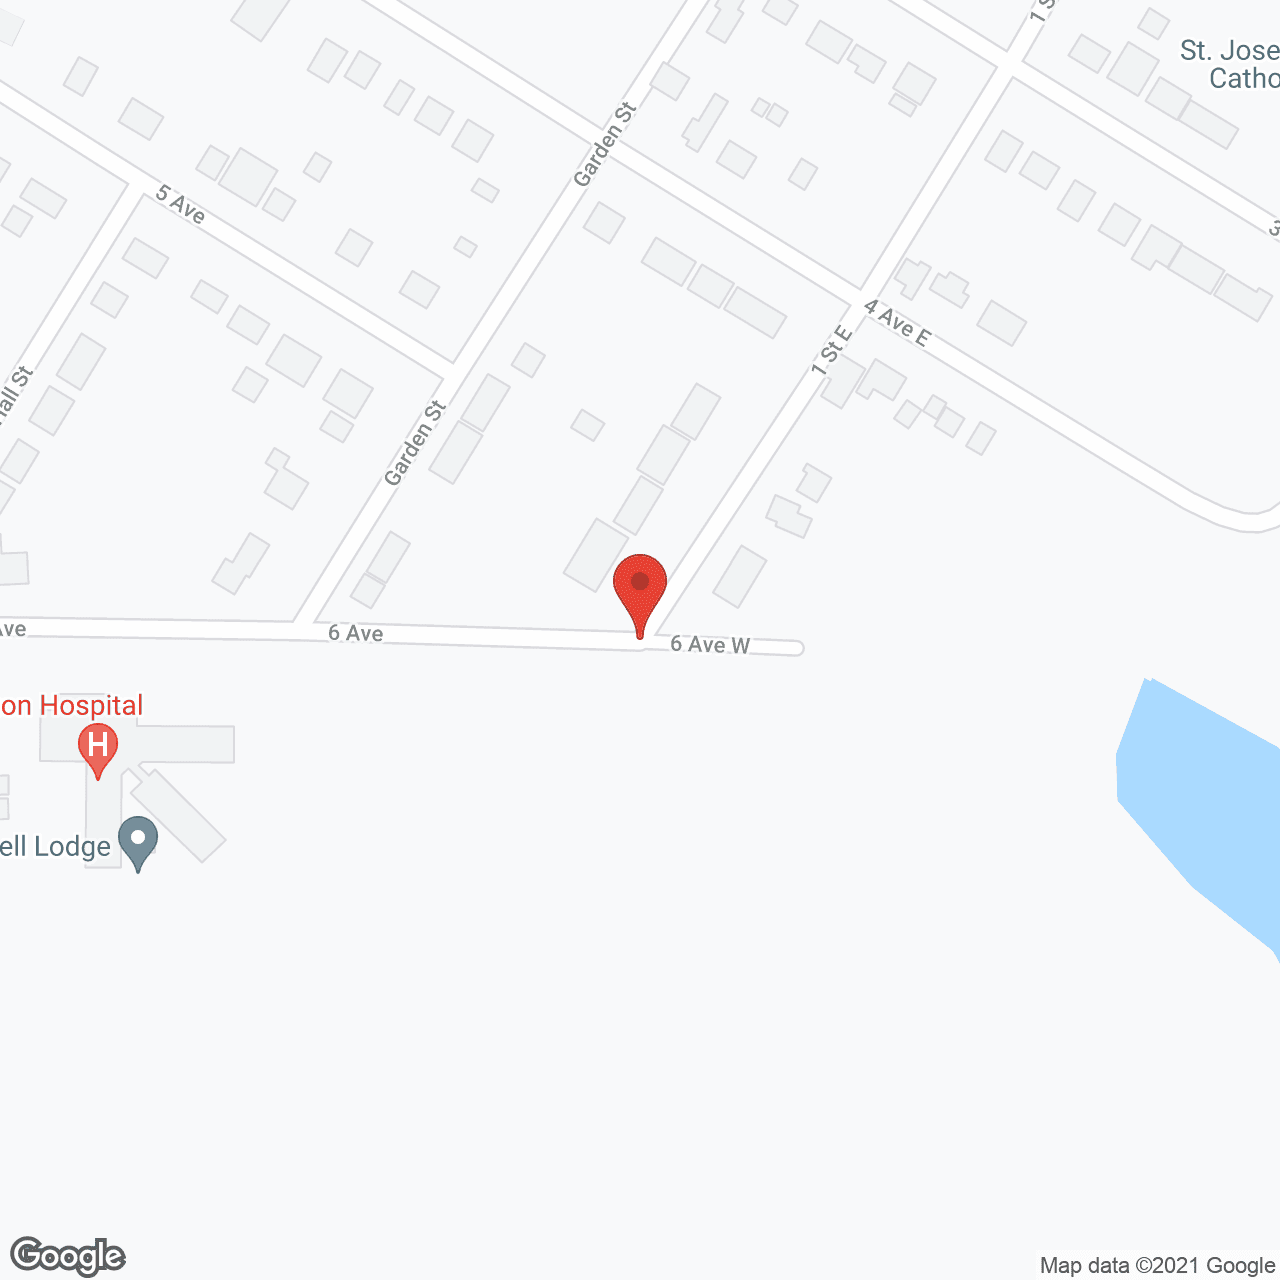 Kelvindell Lodge in google map